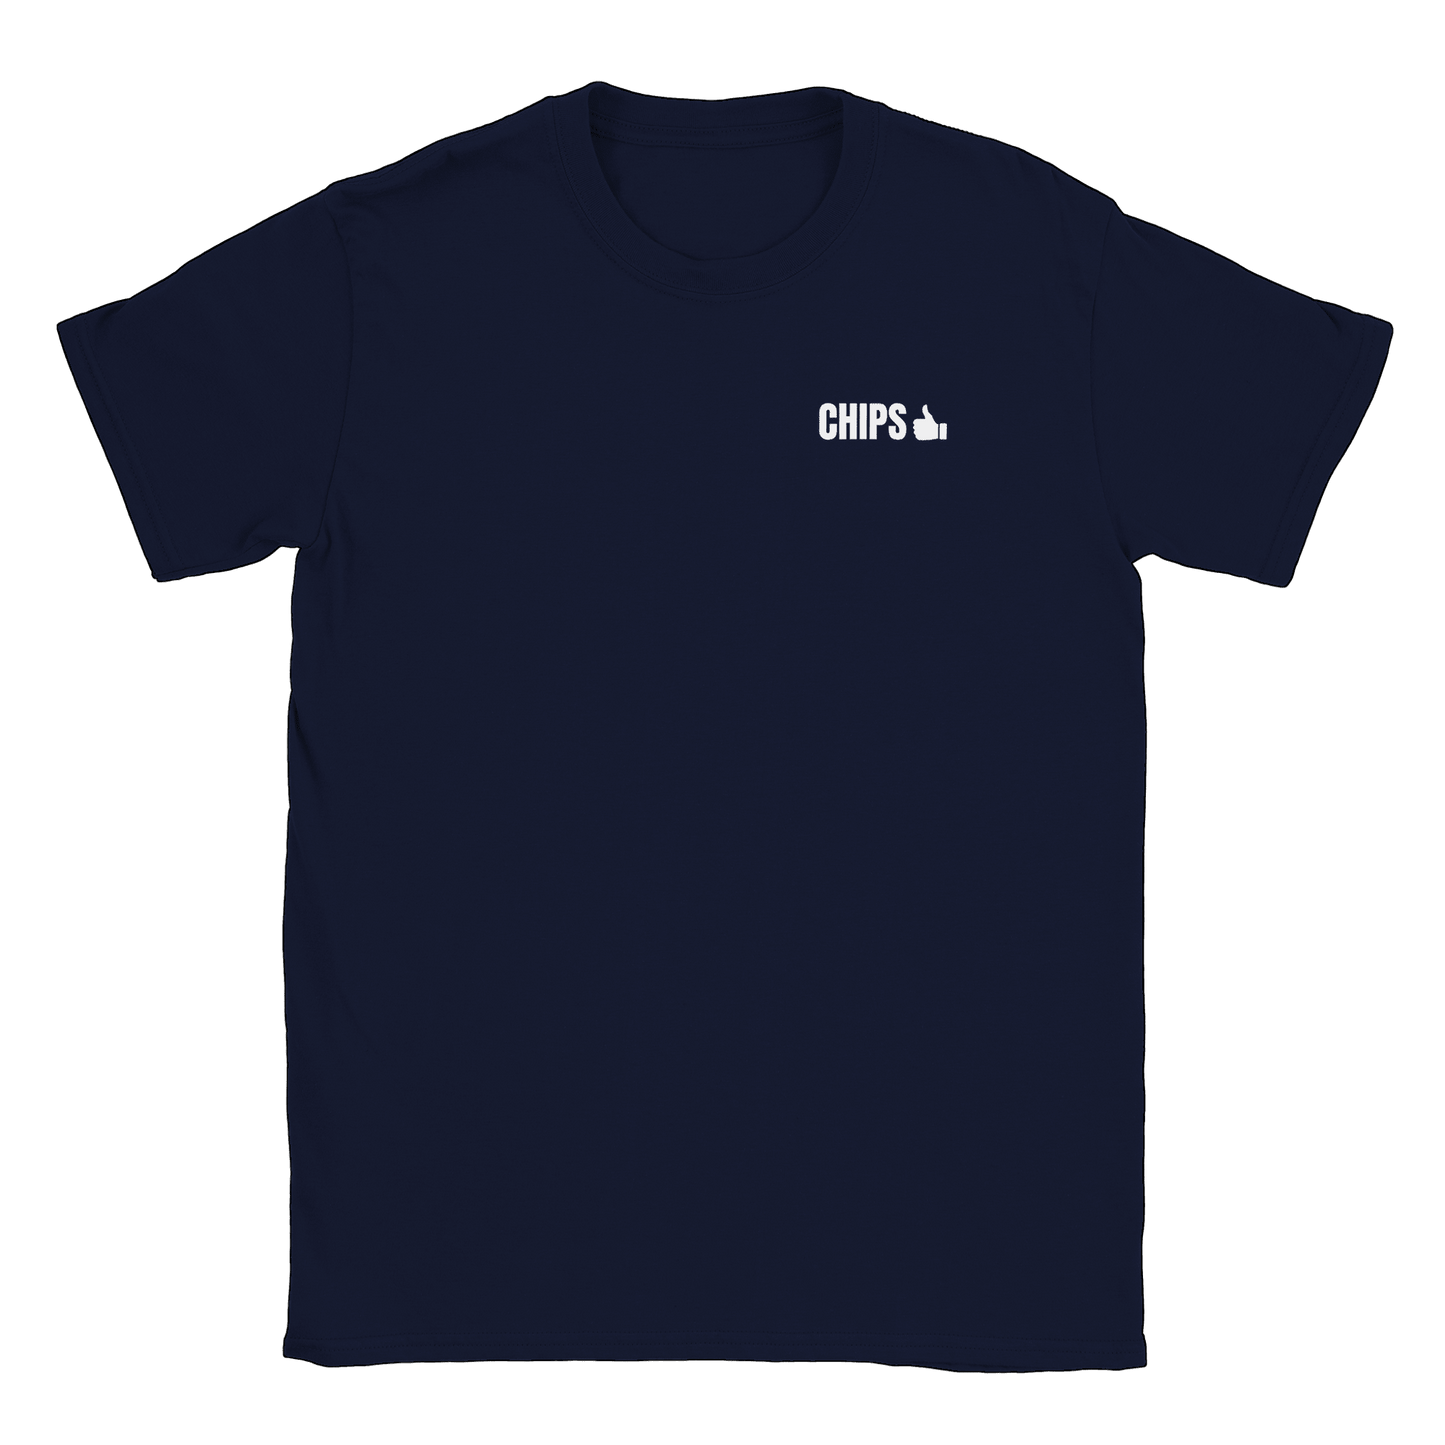 Chips - T-shirt Navy